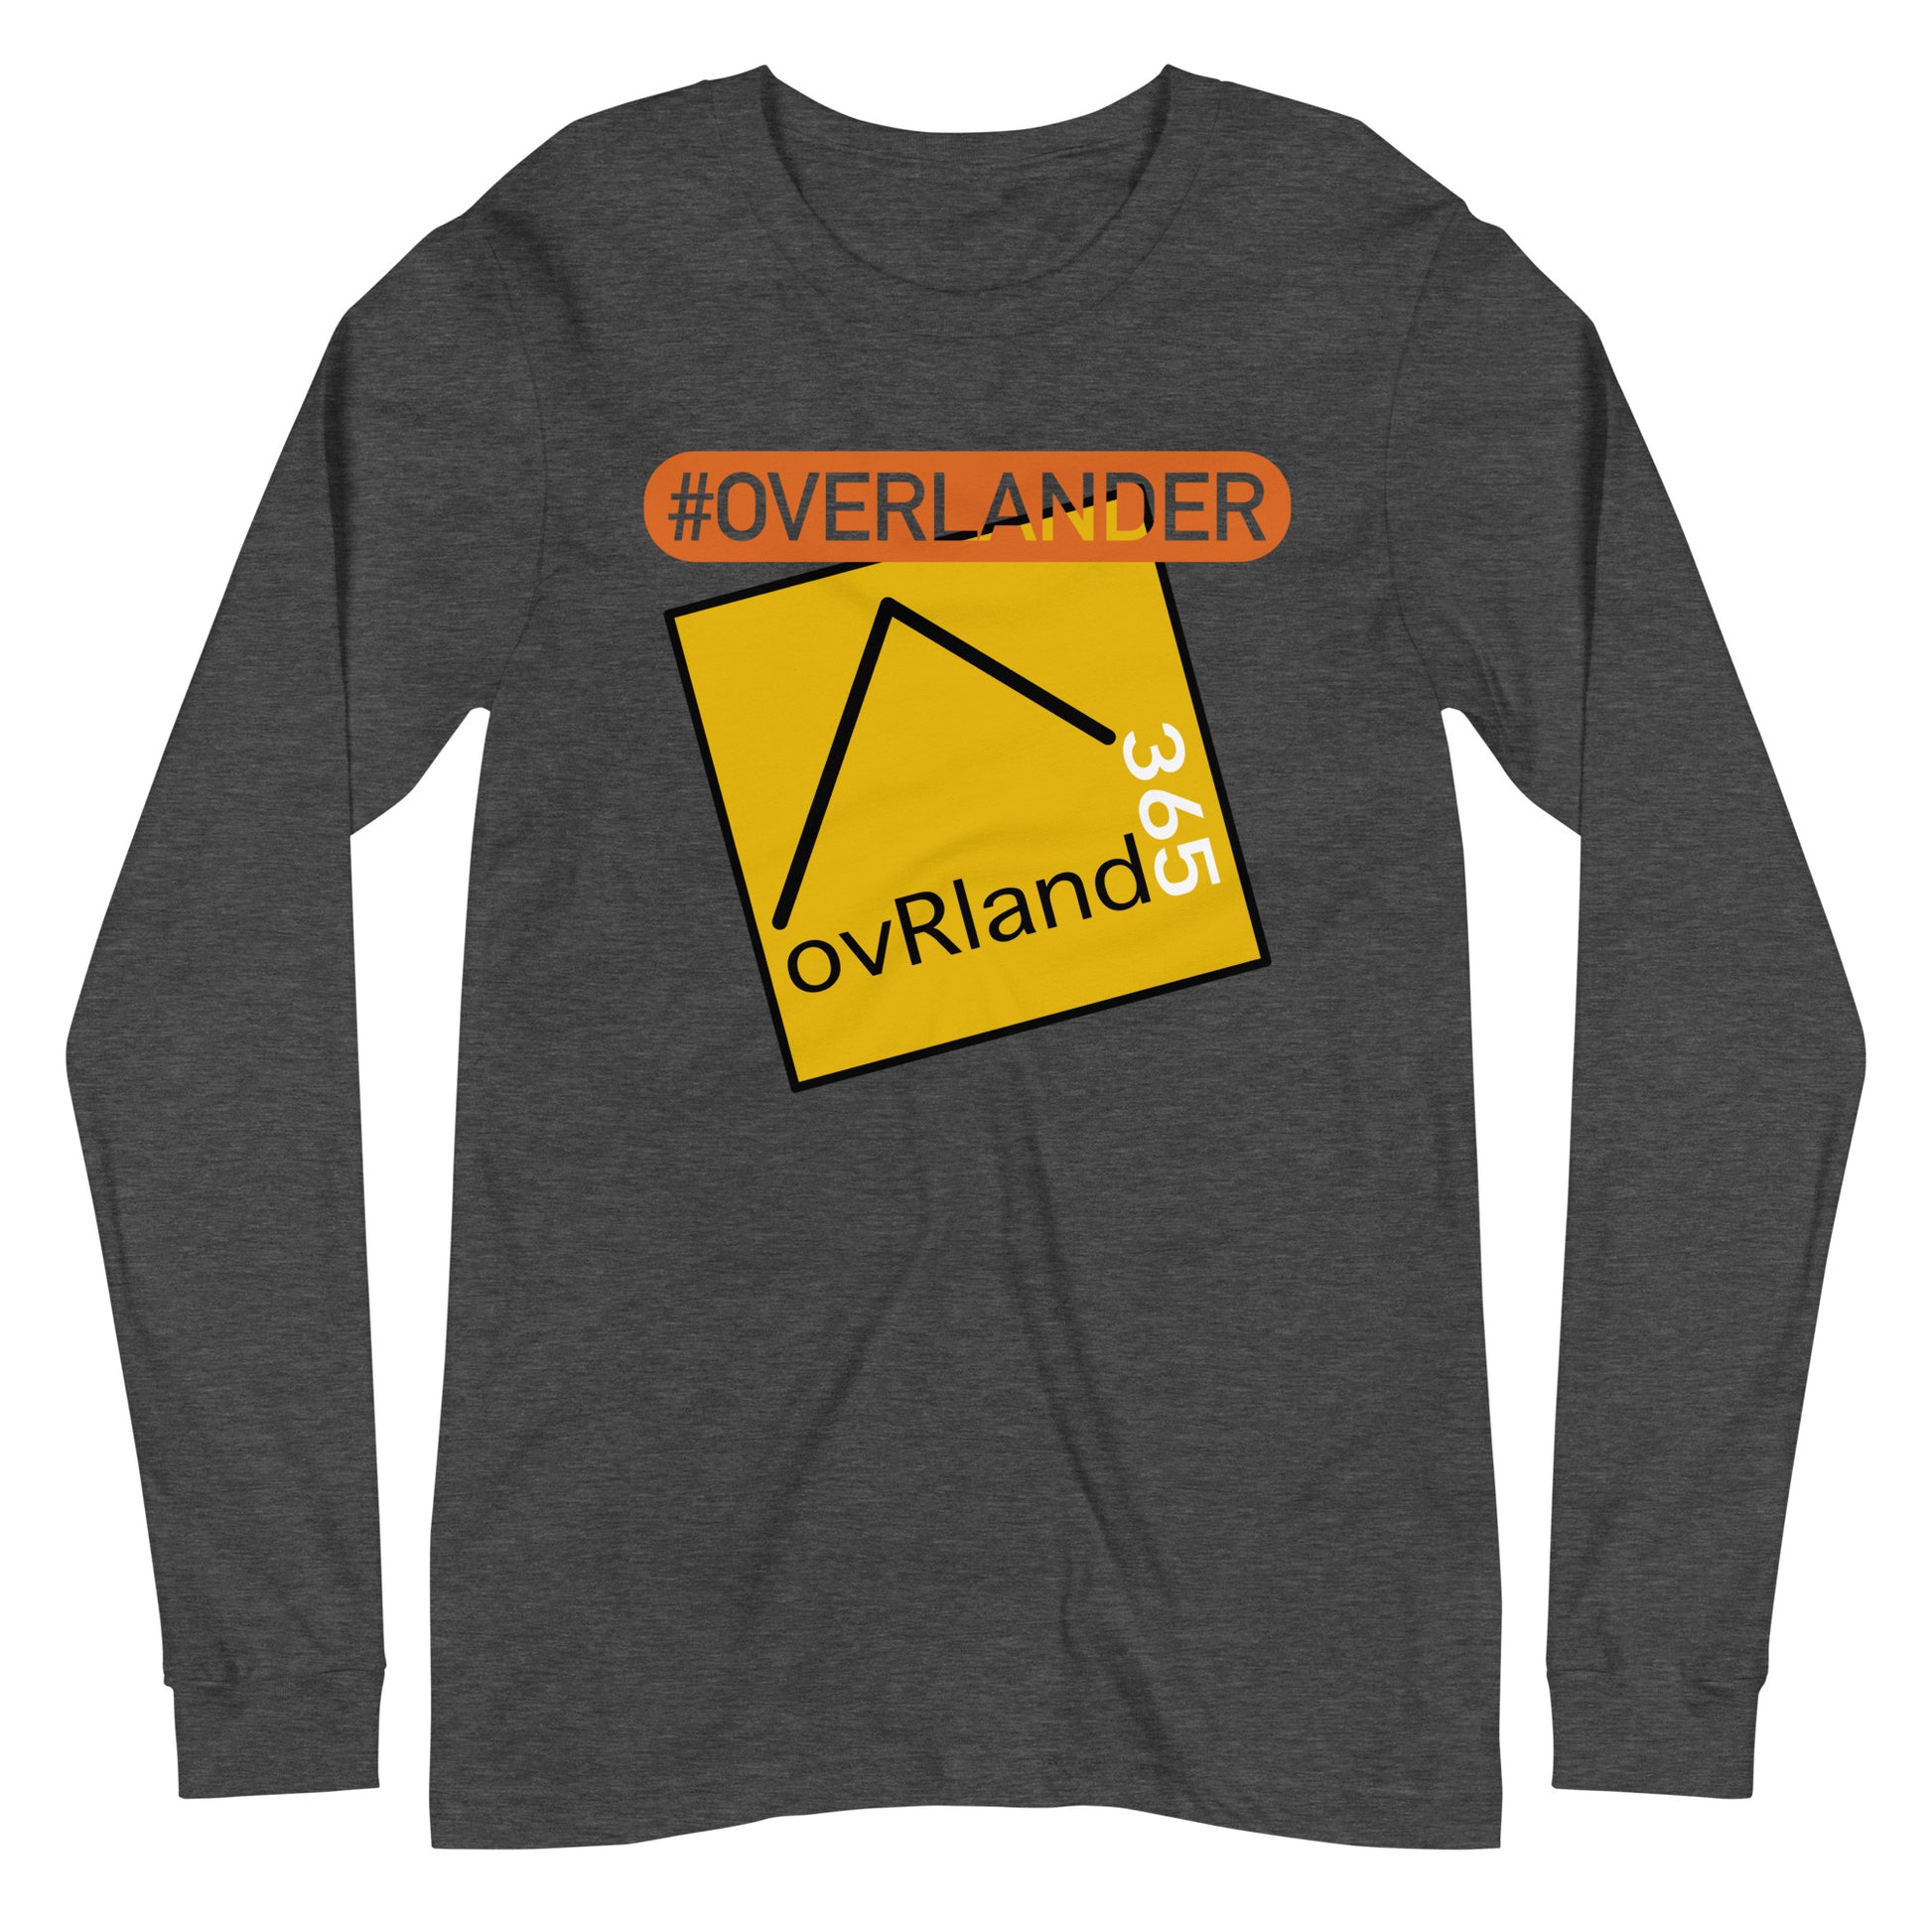 #overlander overlanding long-sleeve, dark grey. overland365.com